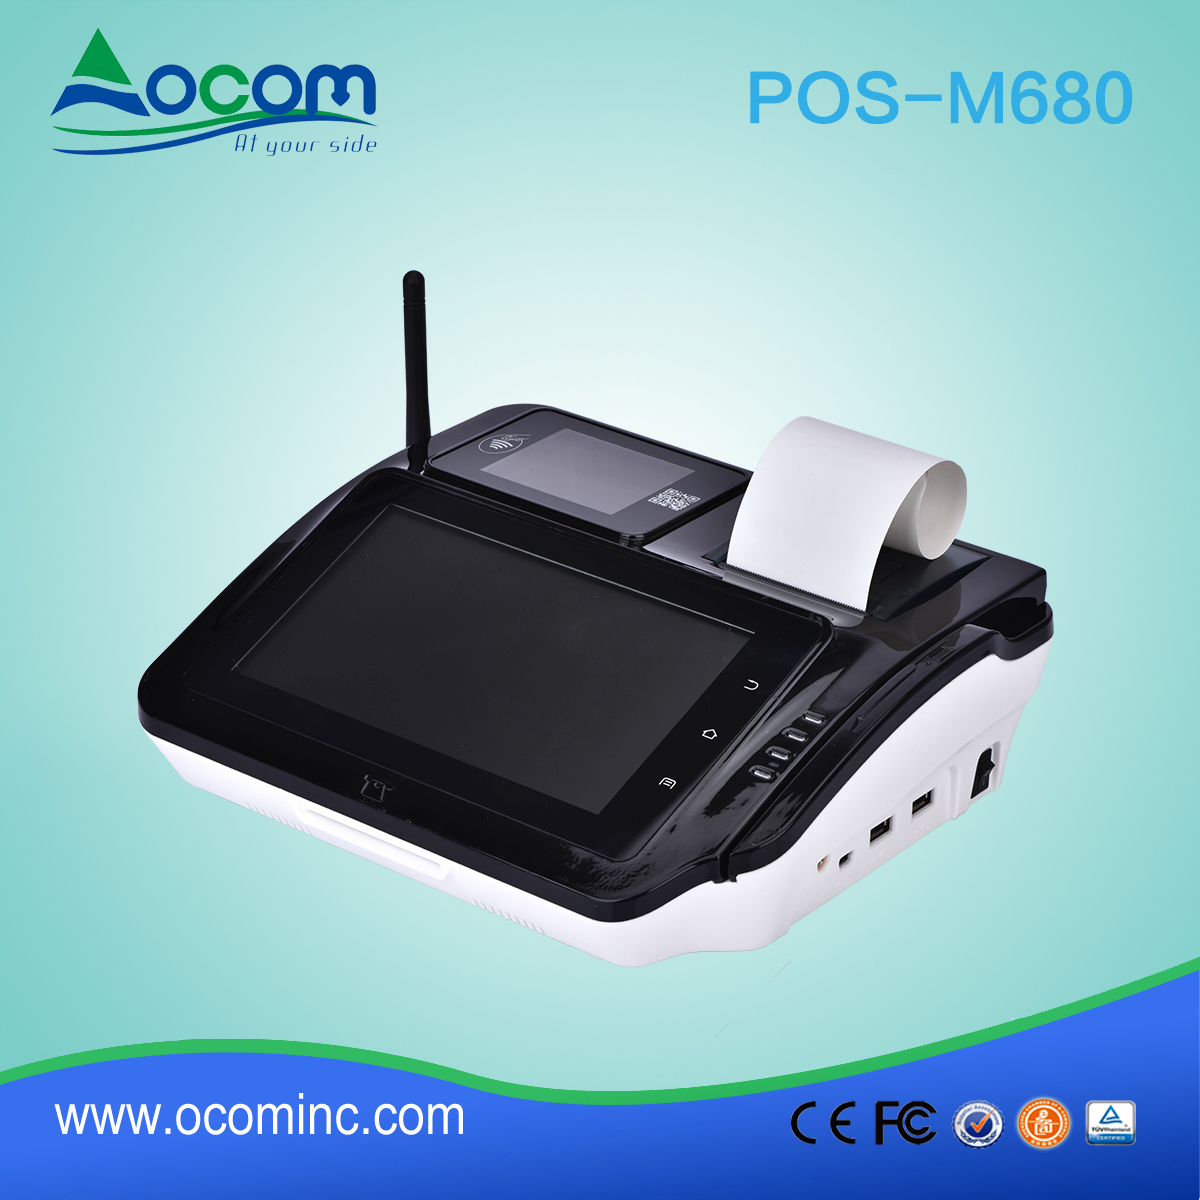 POS-M680 POS With Smart Card Reader and Fingerprint Reader